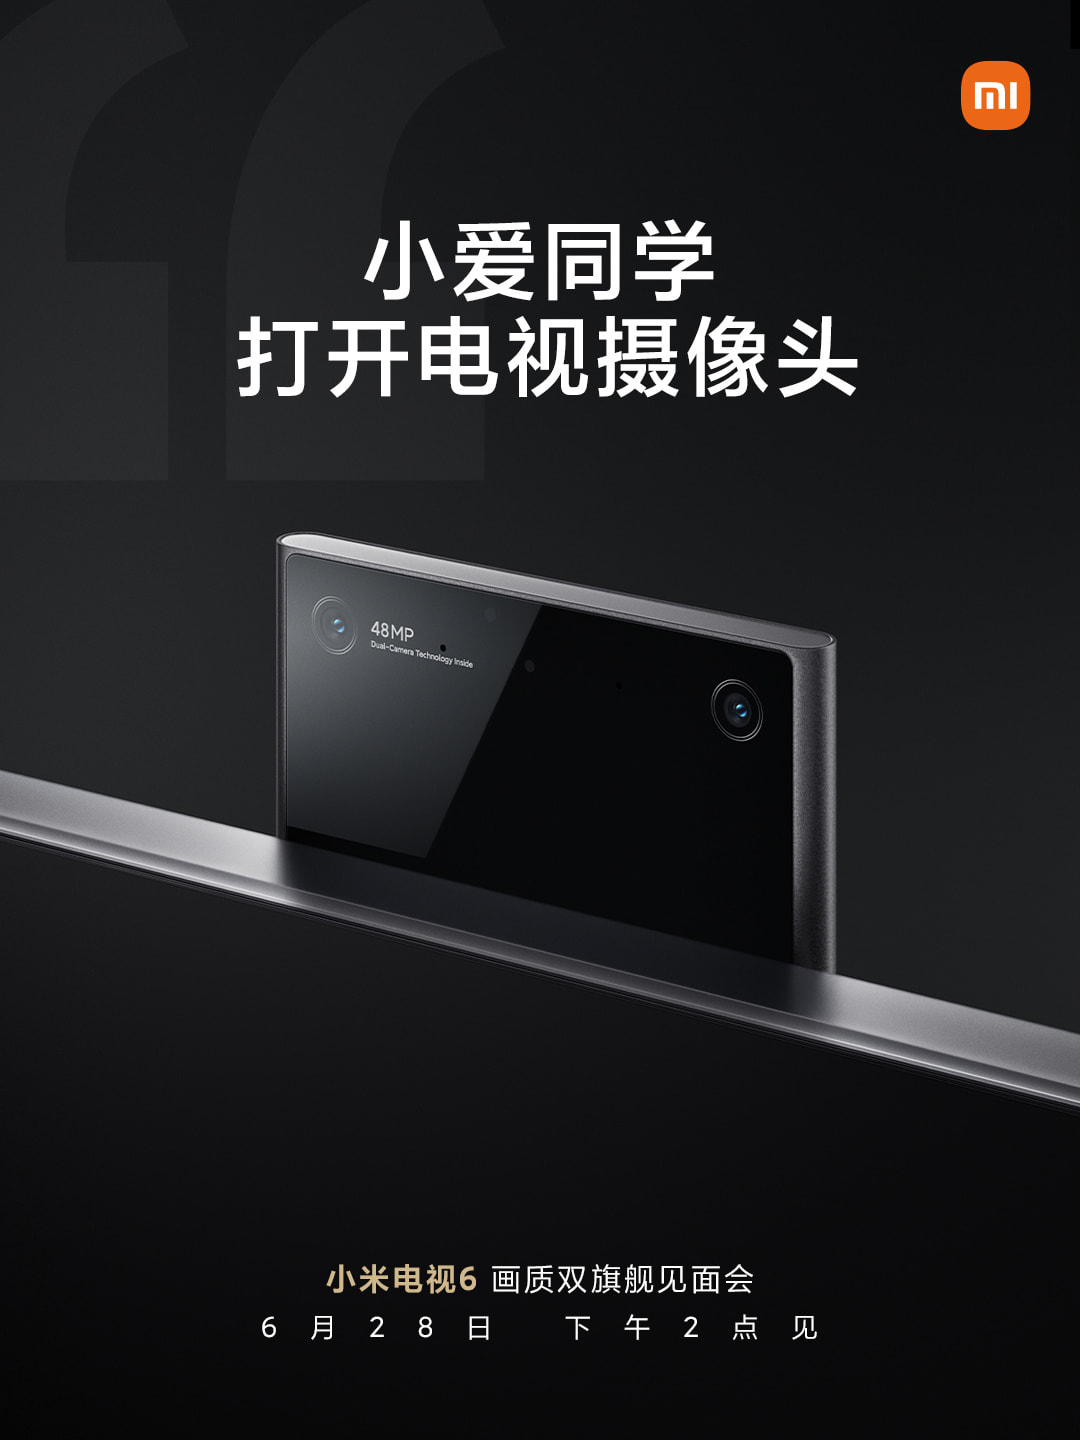 Xiaomi Mi TV 6 dual camera